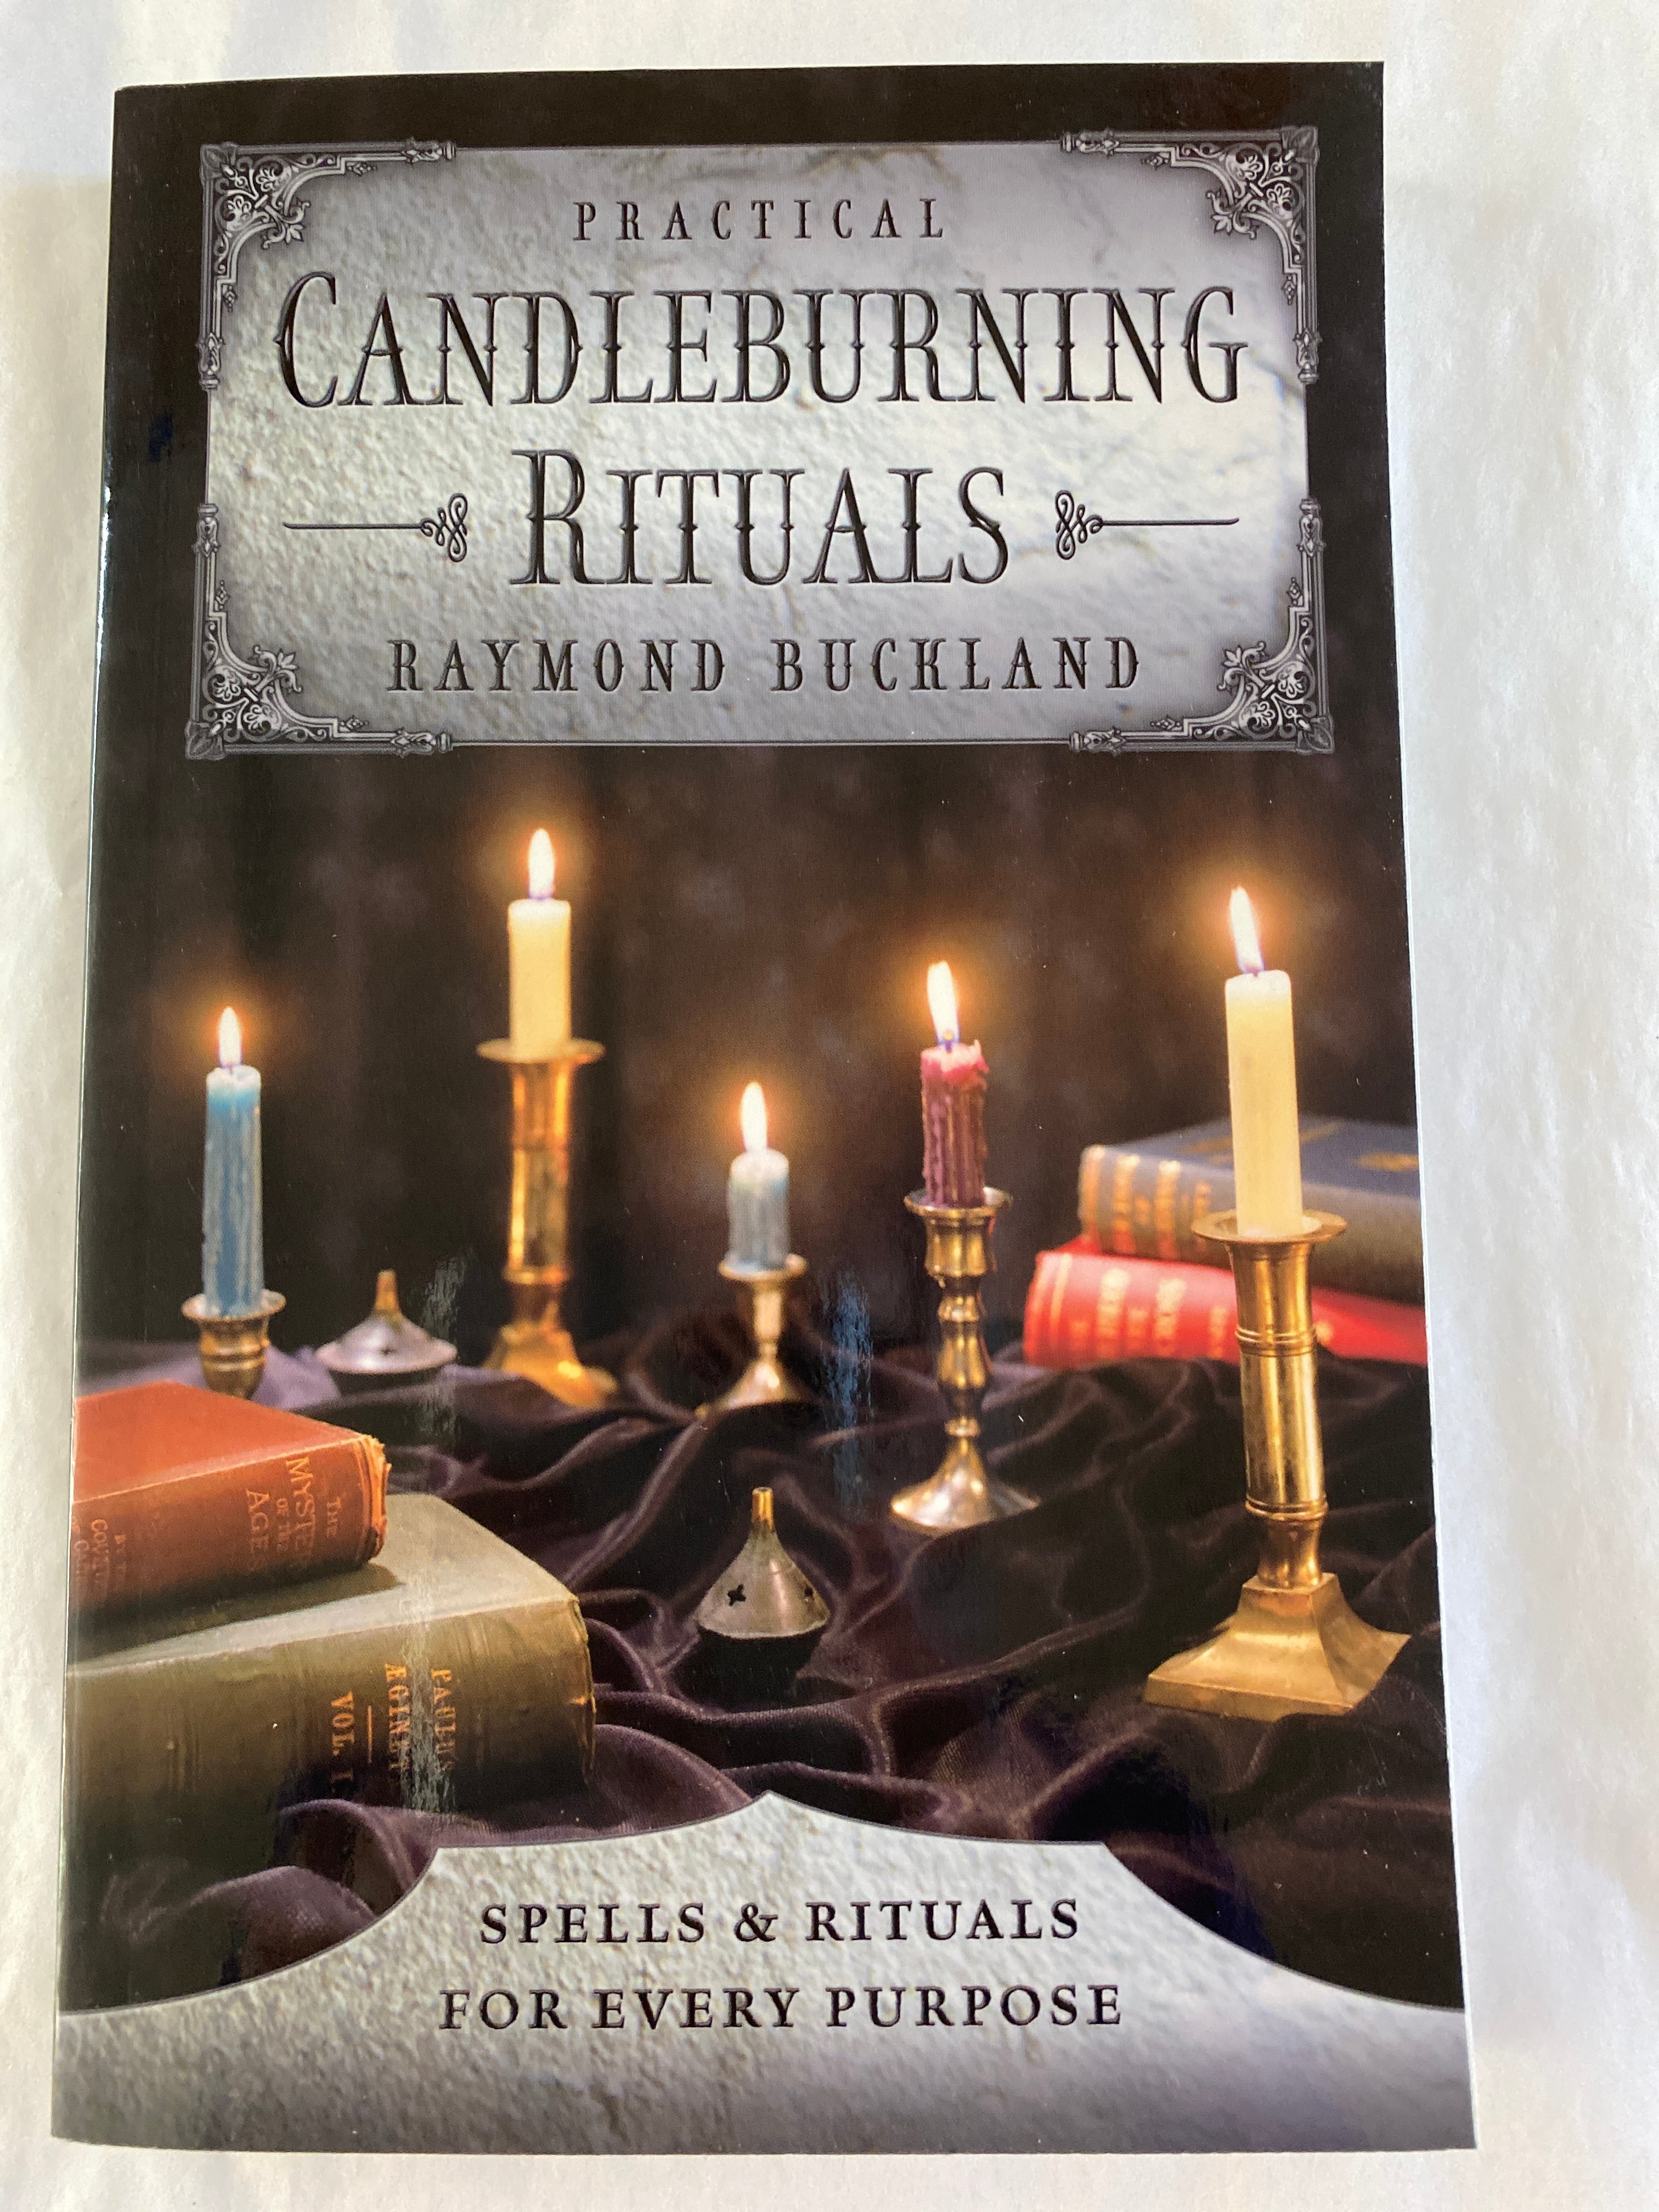 Practical Candle Burning Ritual